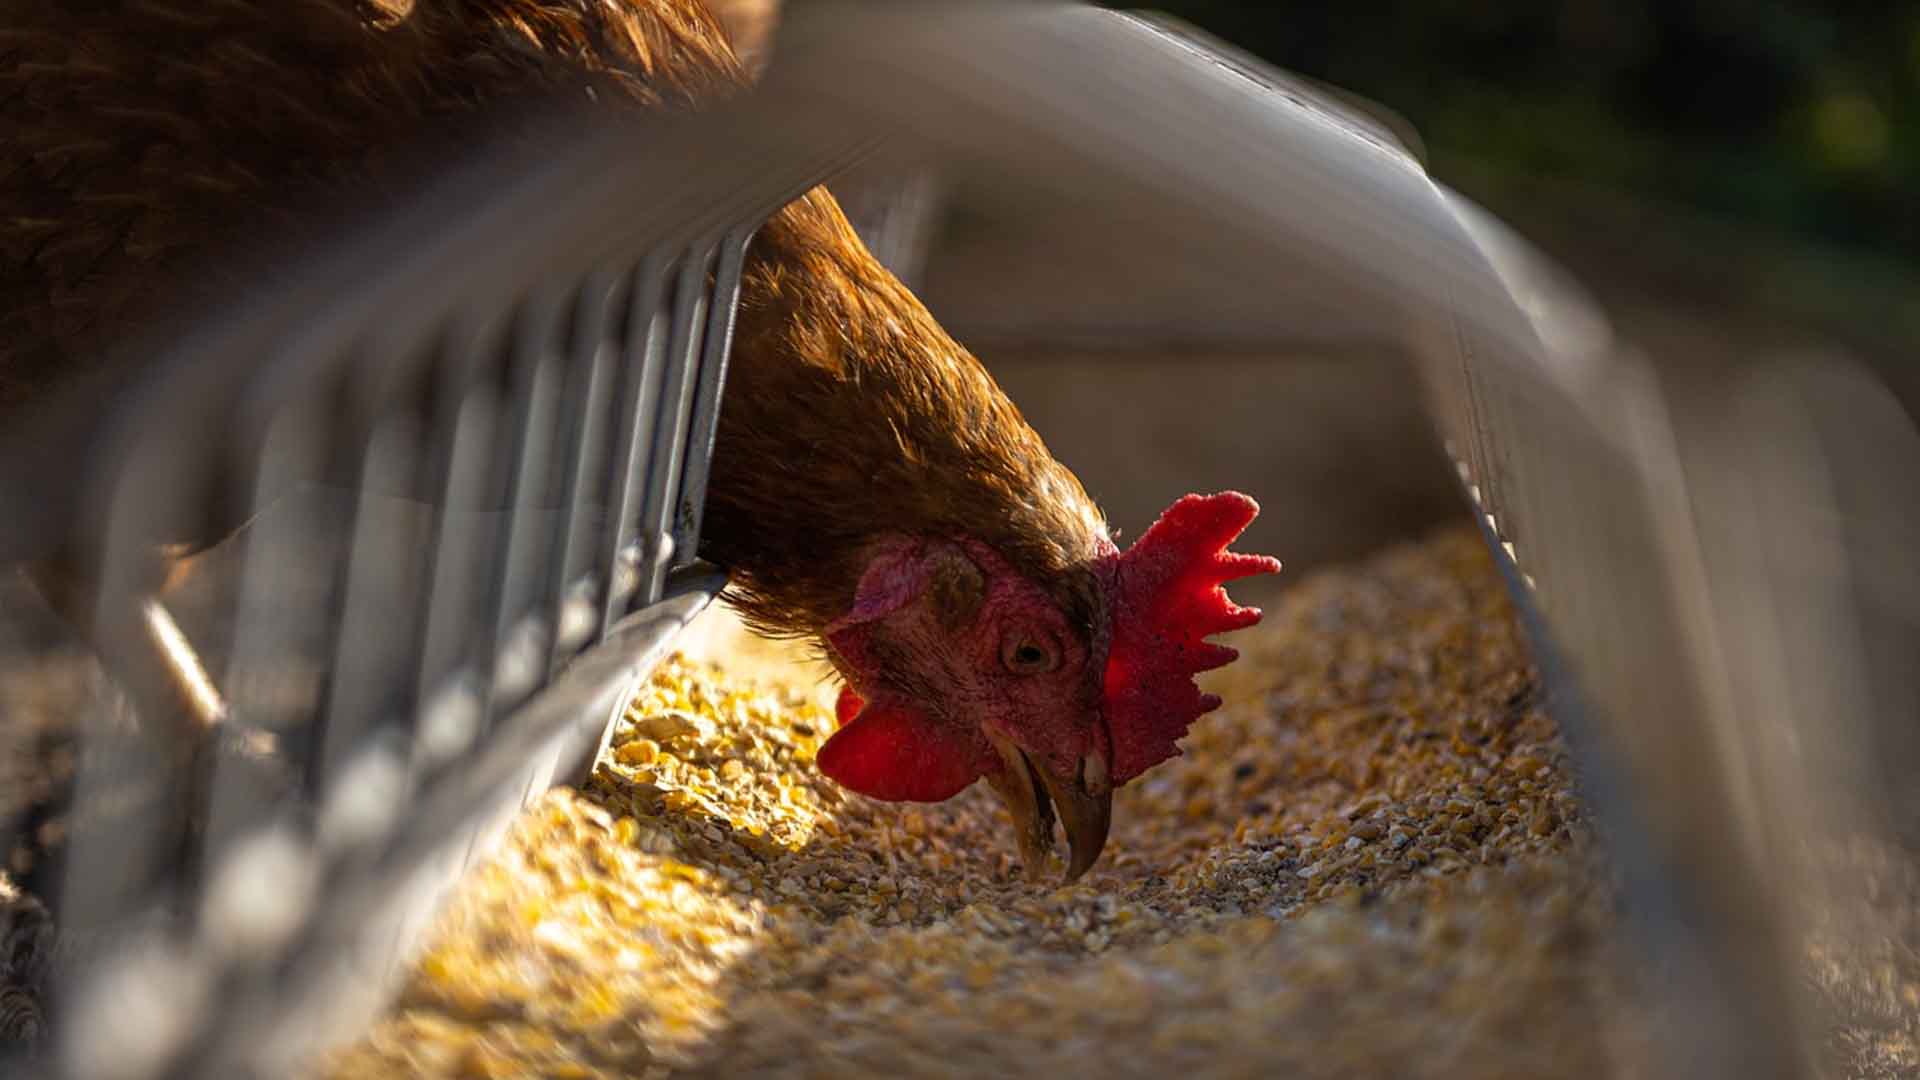 Normativa europea sobre bienestar animal (granja avícola)